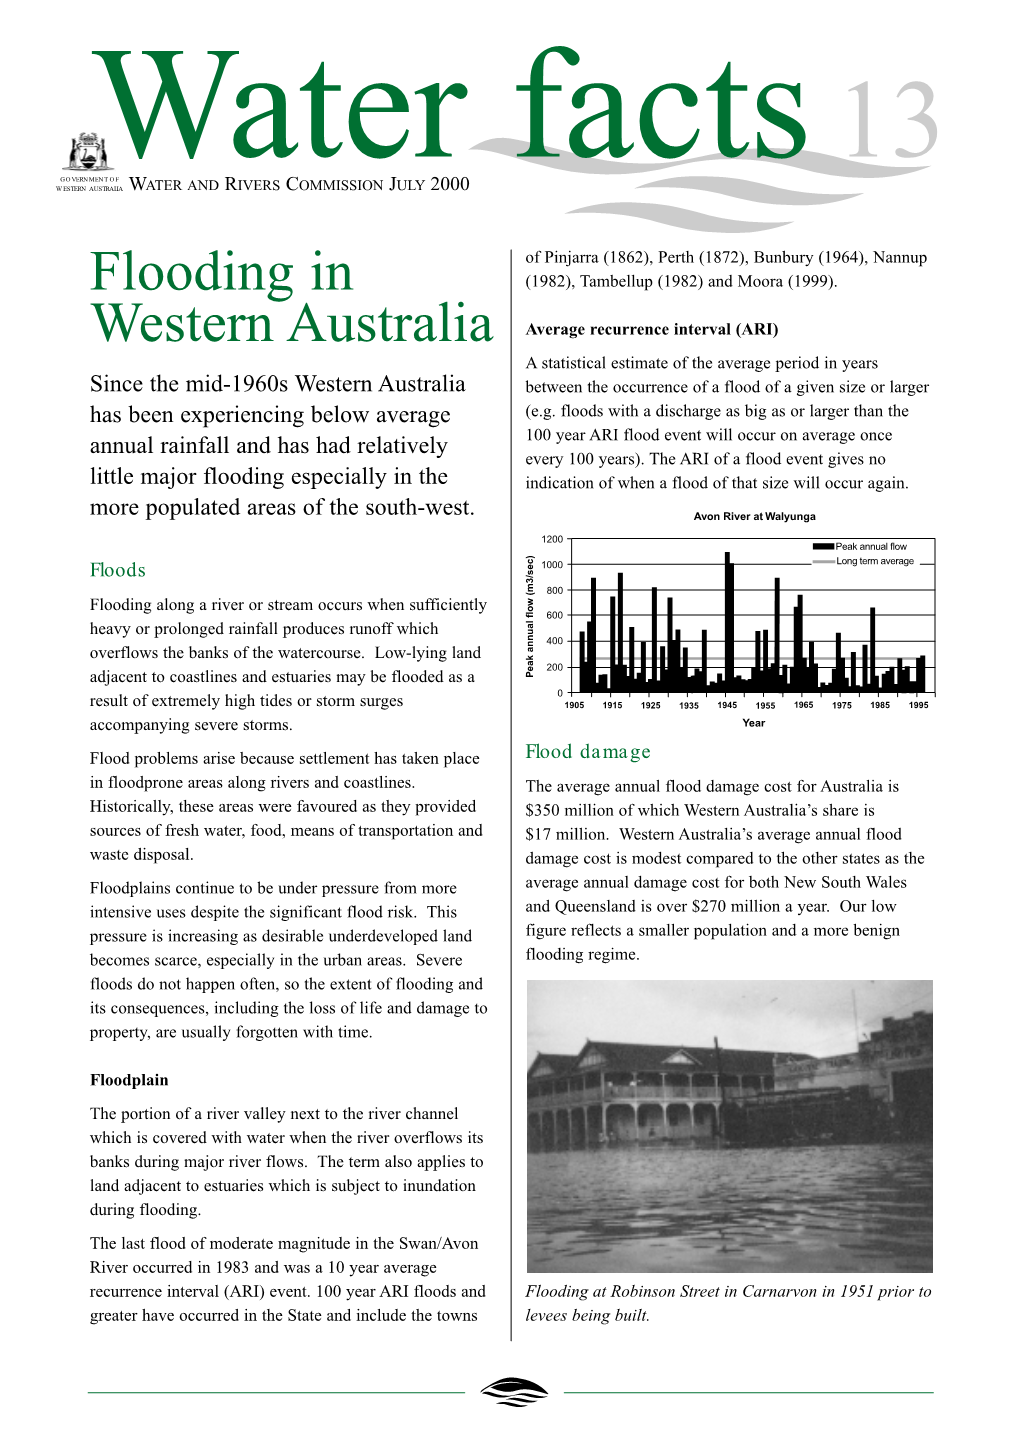 Flooding in Western Australia